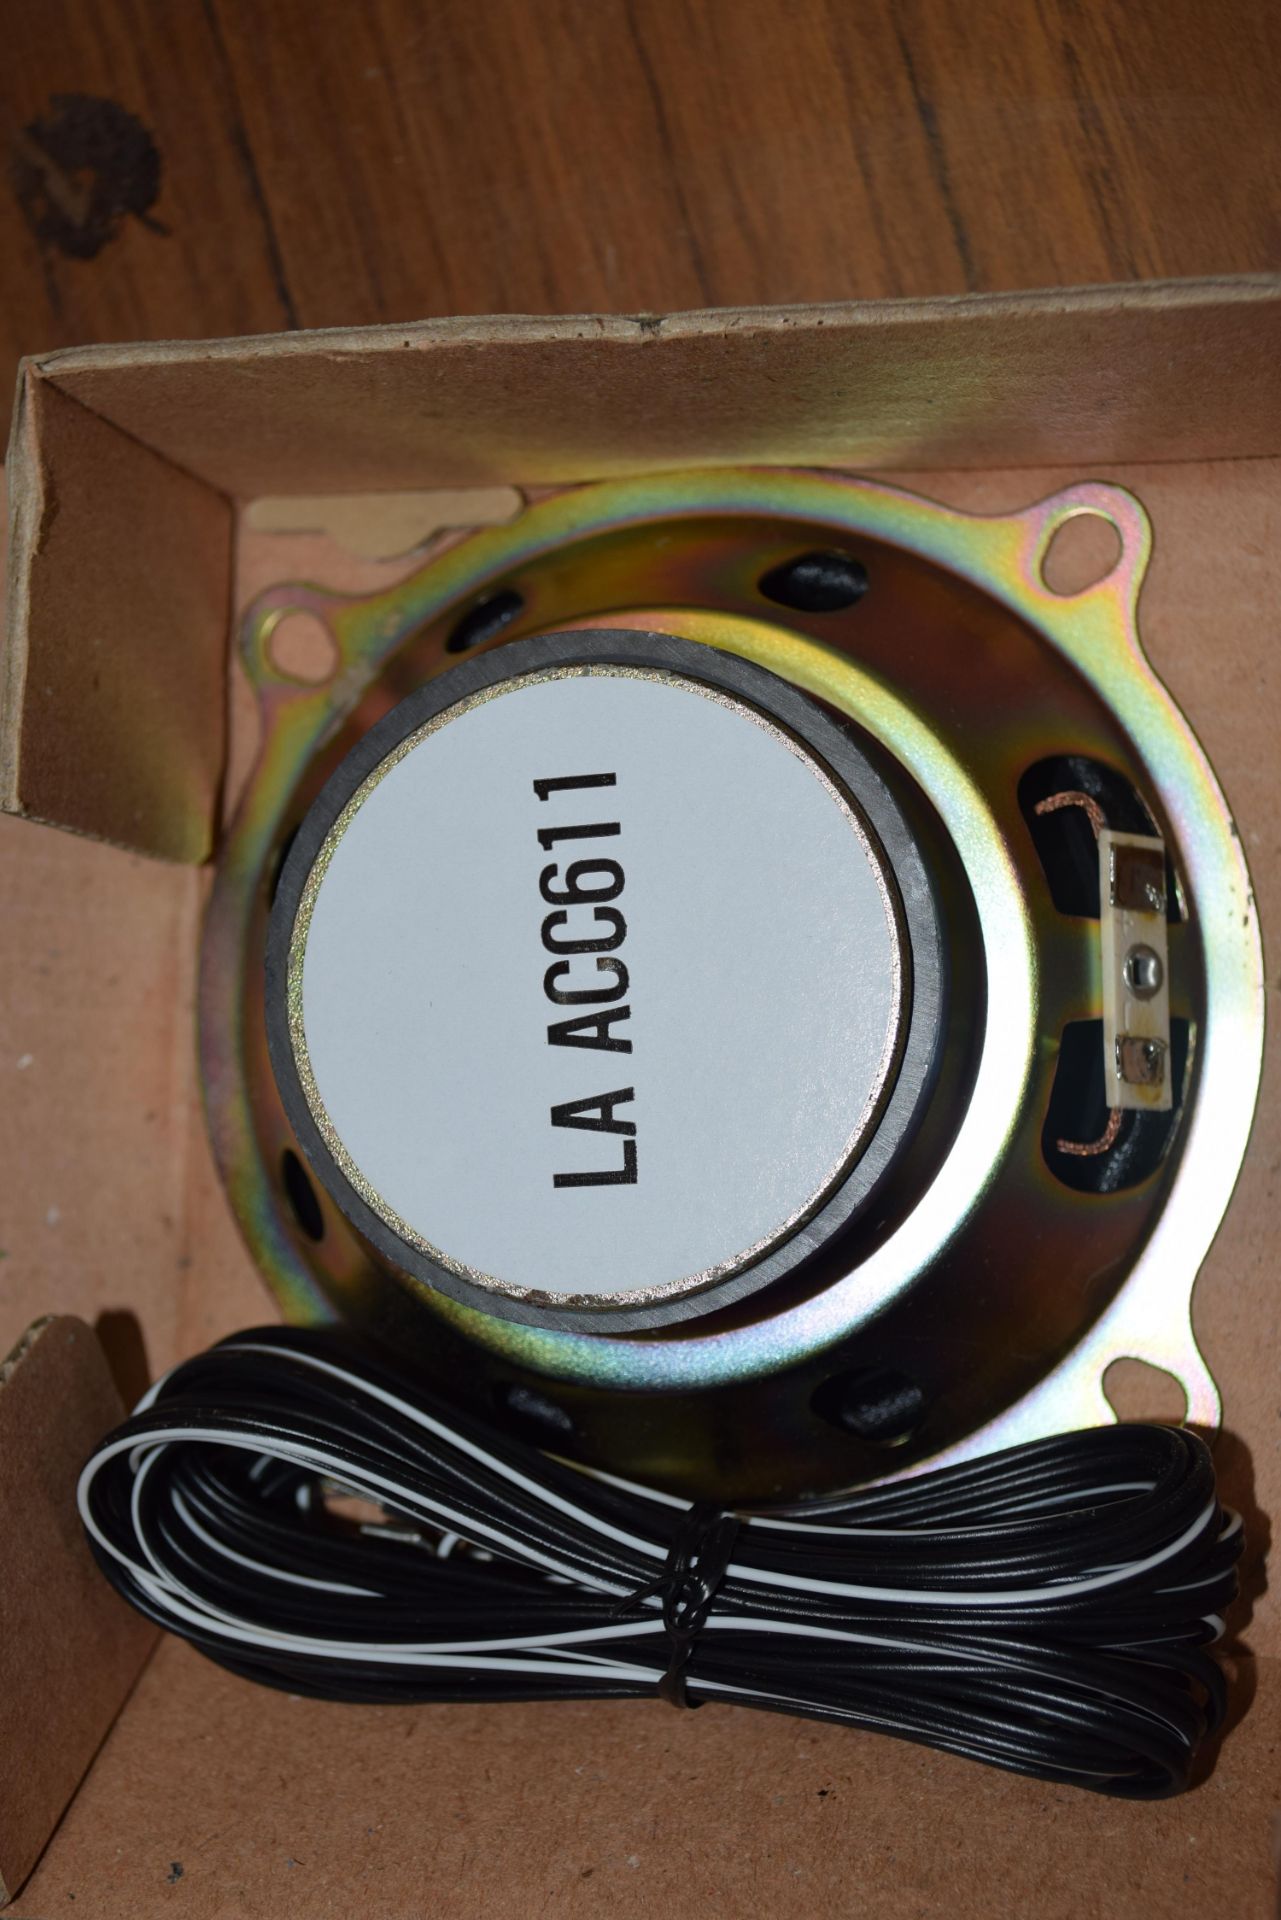 10 BOXED PHOENIX AUDIO CAR SPEAKERS, MODEL NO LAACC611 - Image 4 of 4